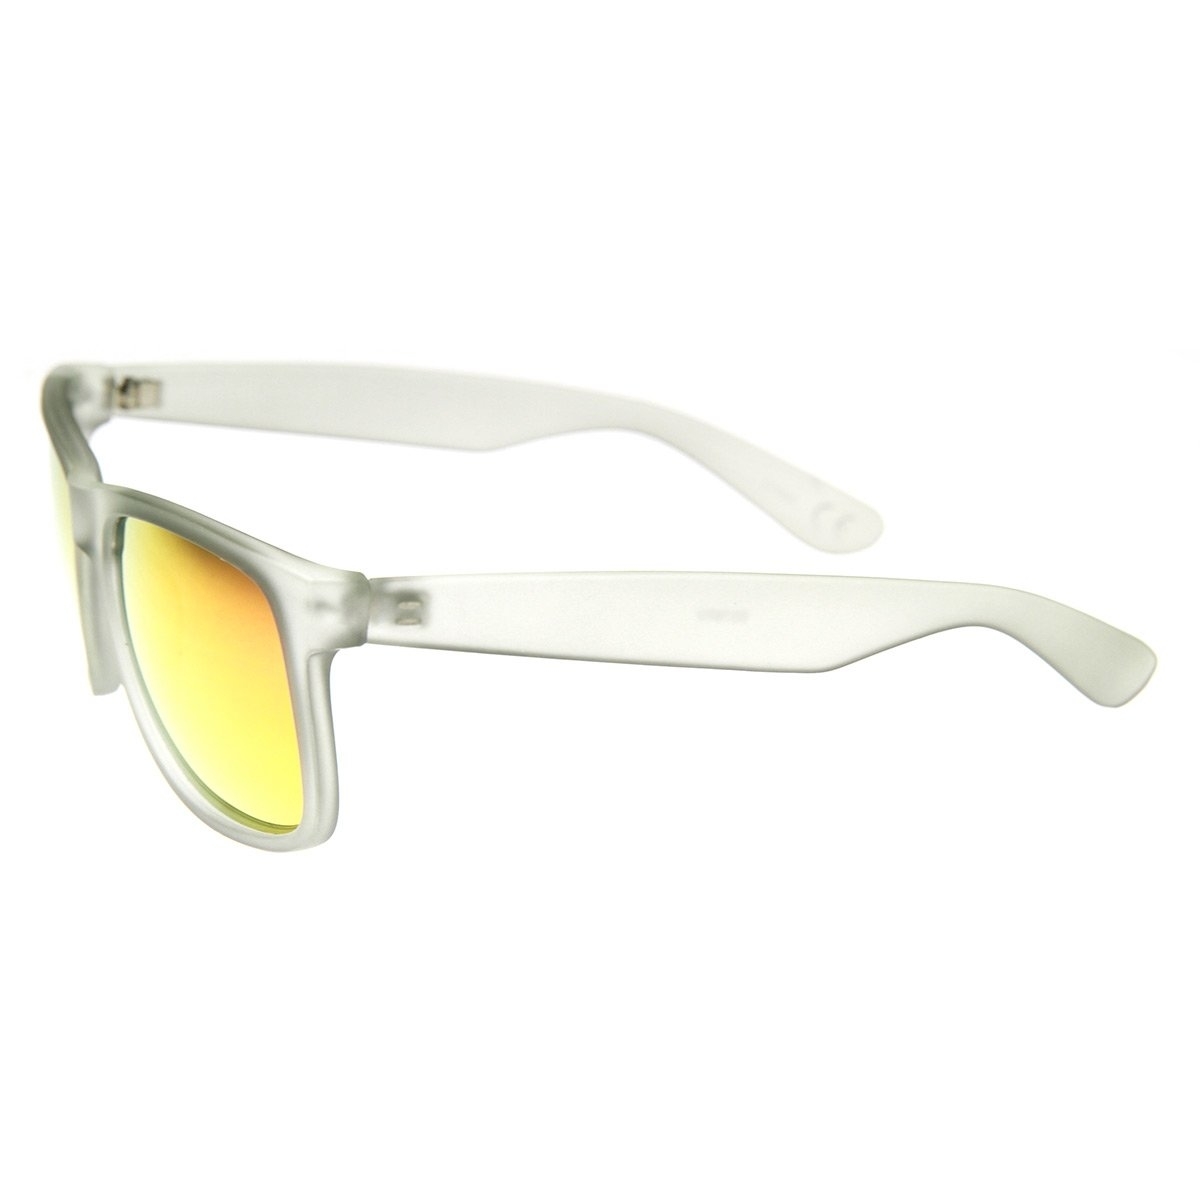 Action Sports Square Color Mirror Flash Lens Active Horn Rimmed Sunglasses - Black Fire